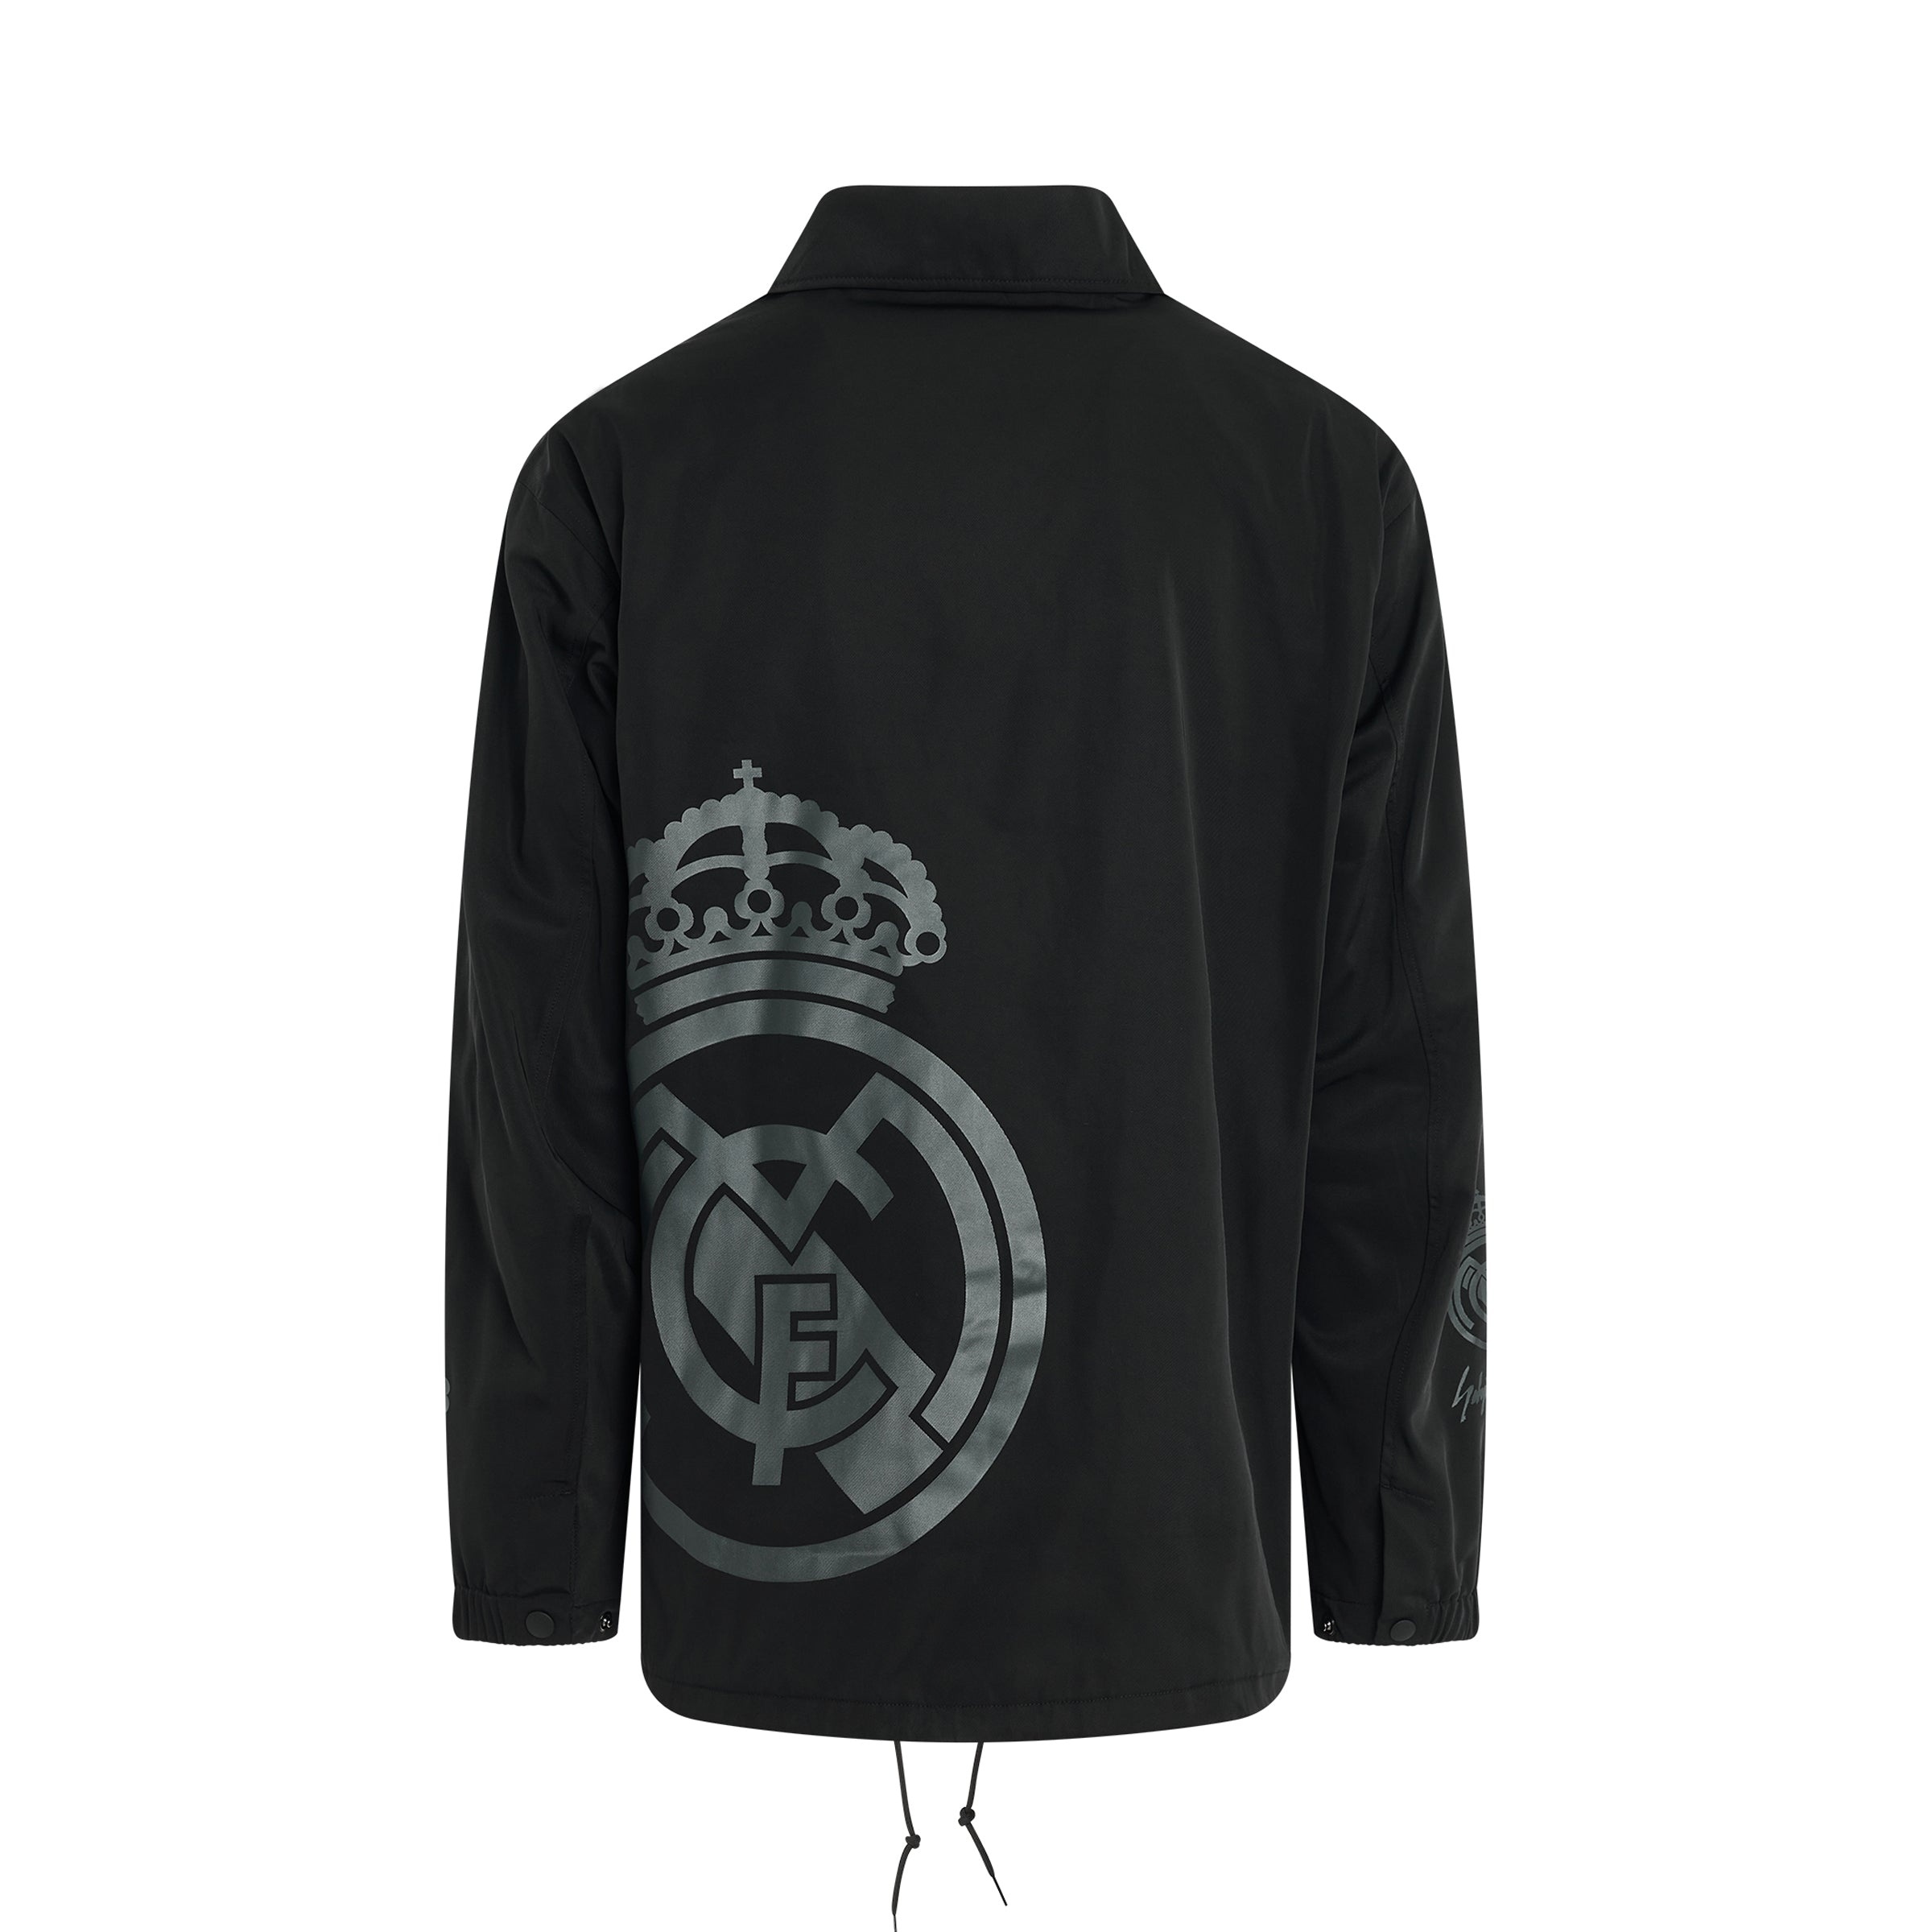 Y-3 x Real Madrid Coach Jacket in Black - 4